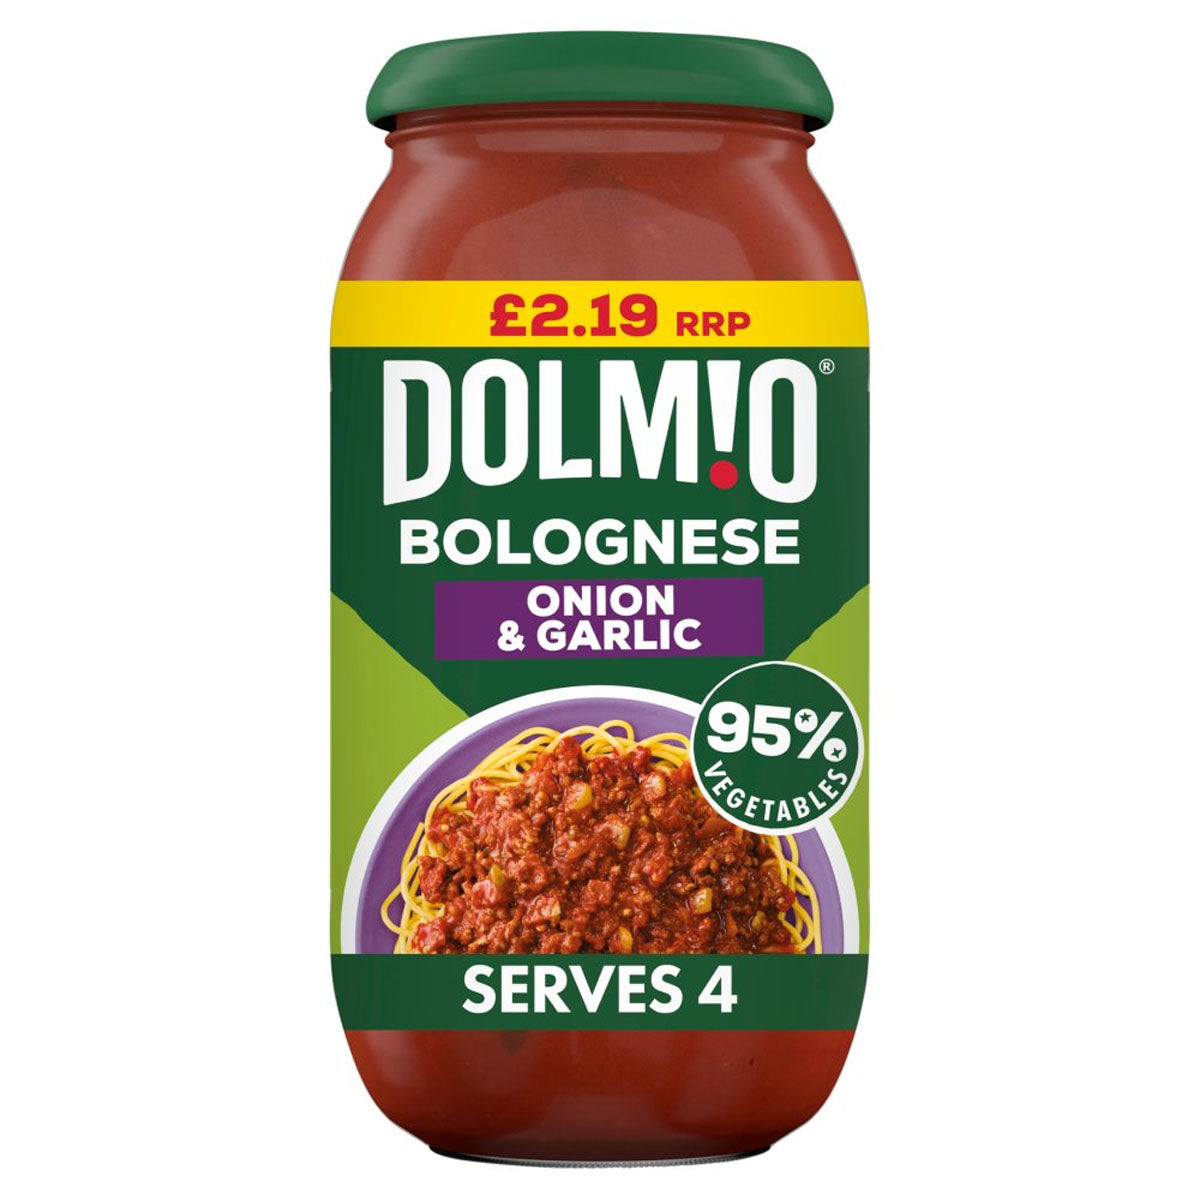 A jar of Dolmio - Bolognese Onion & Garlic Pasta Sauce - 500g.